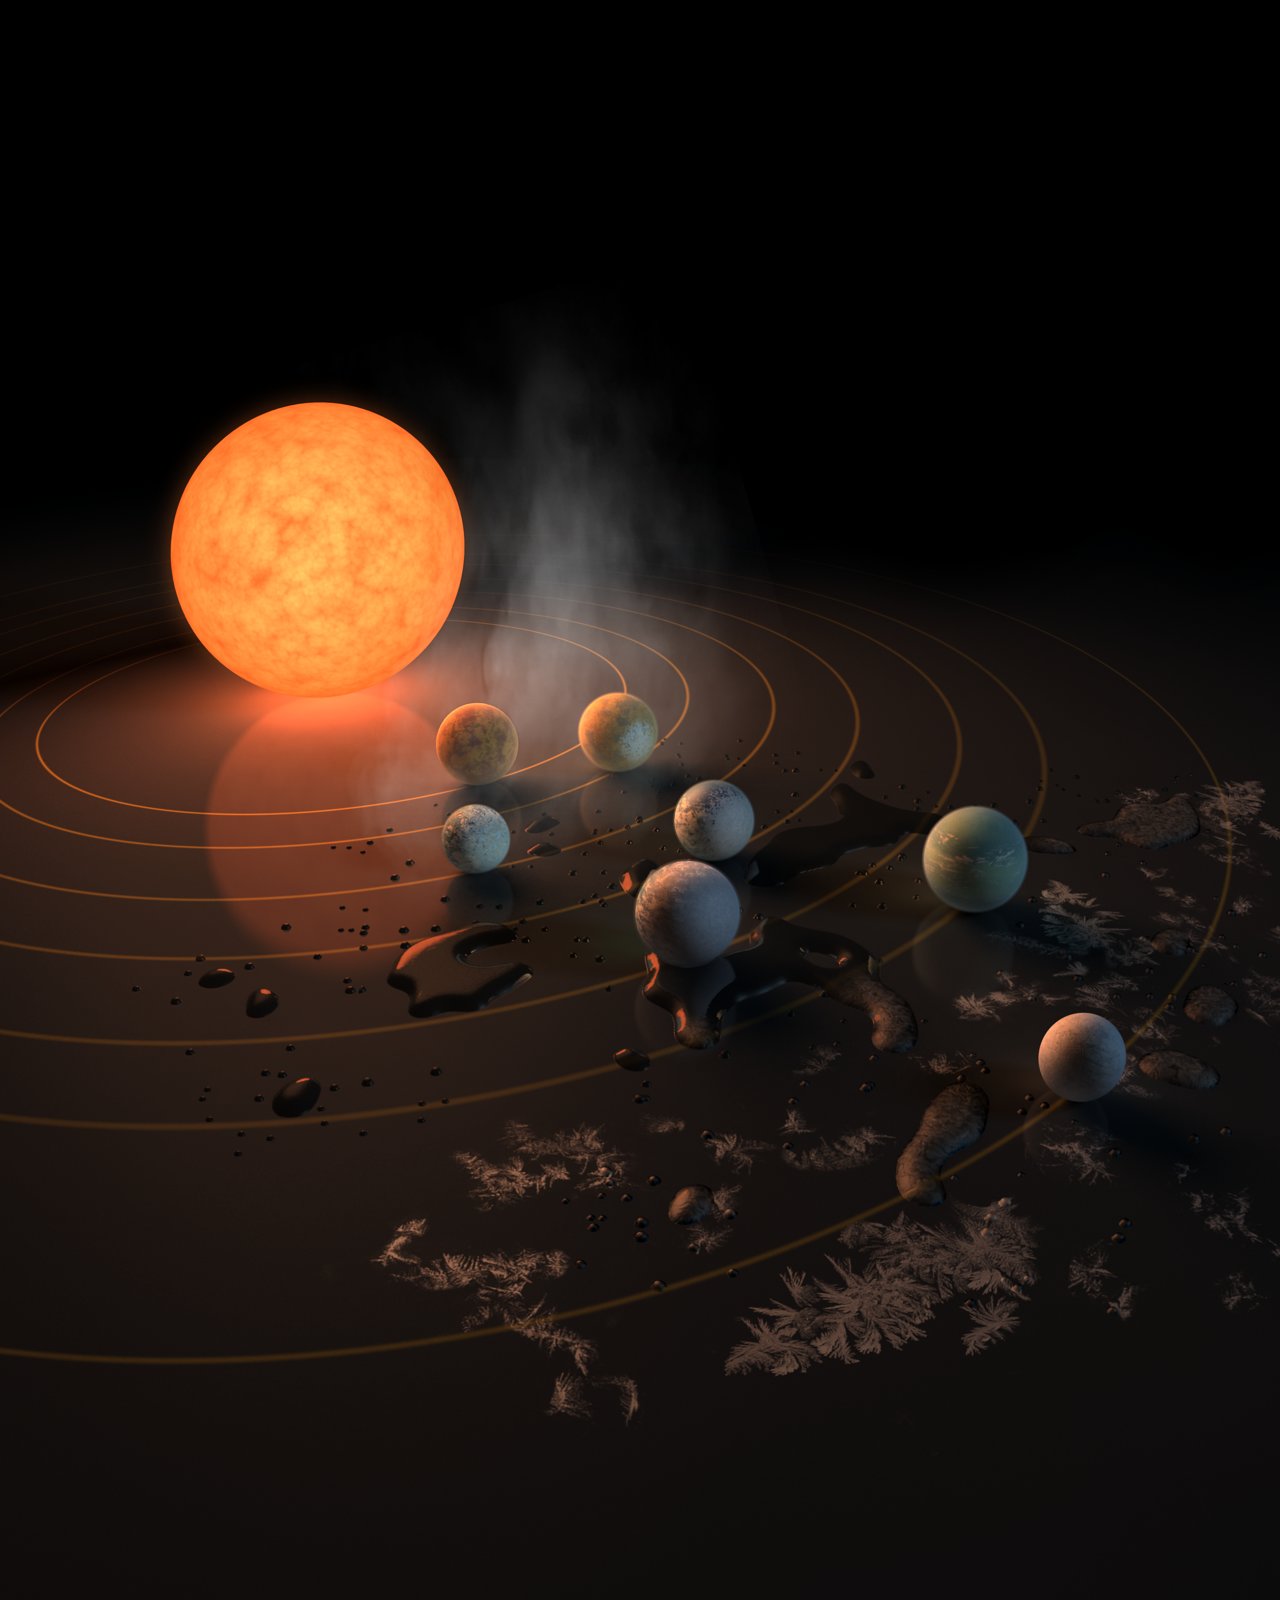 nasa又搞大新闻40光年外发现7颗类地行星